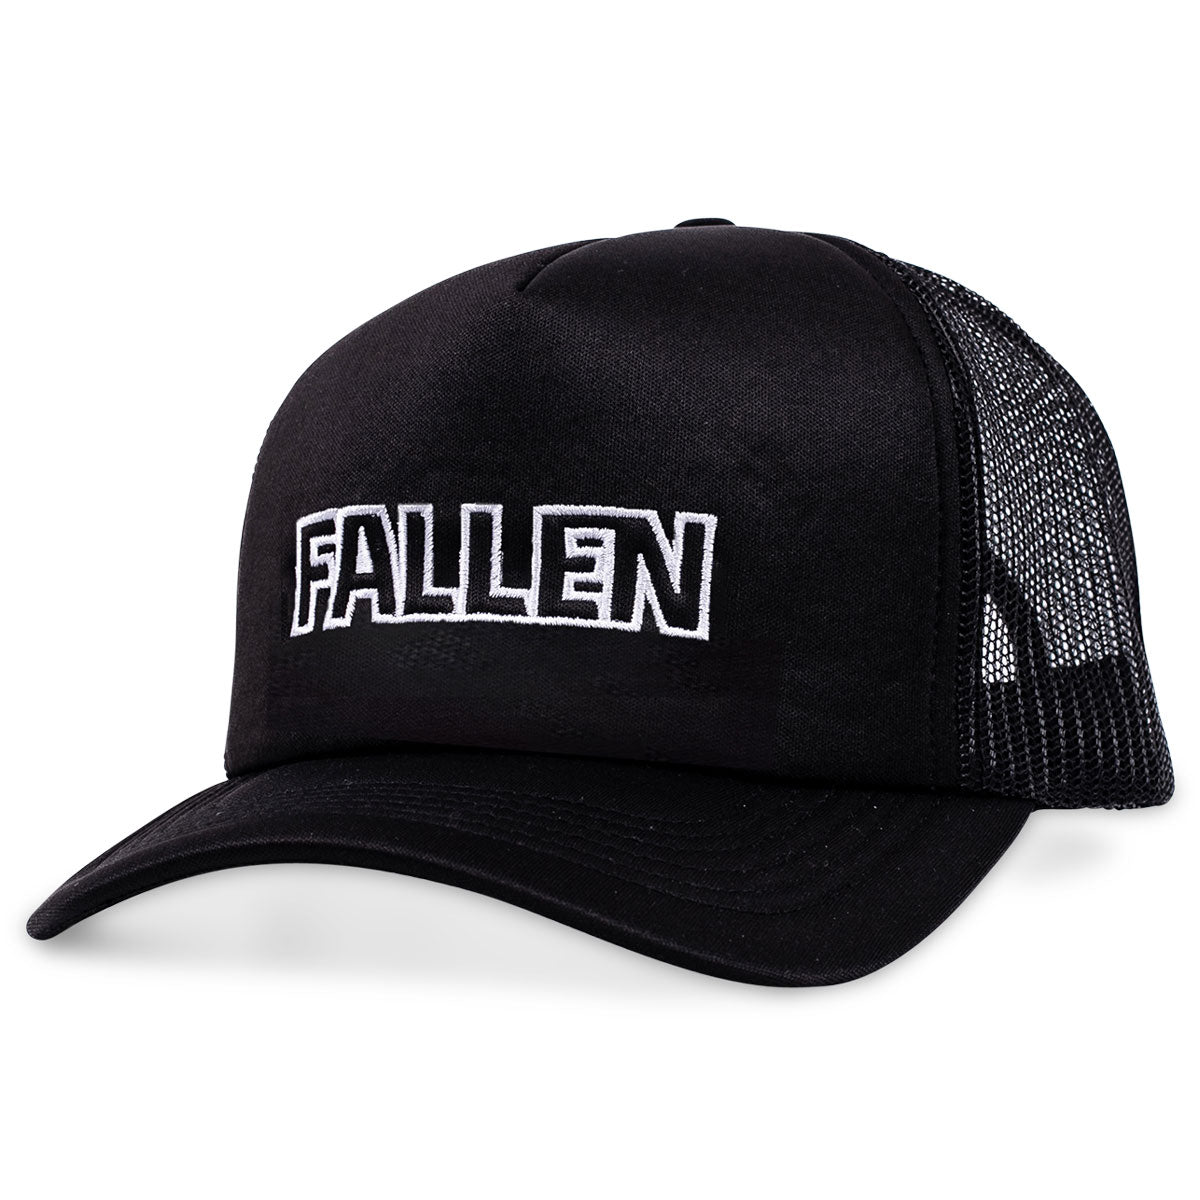 Fallen Bold Hat - Black/White image 1